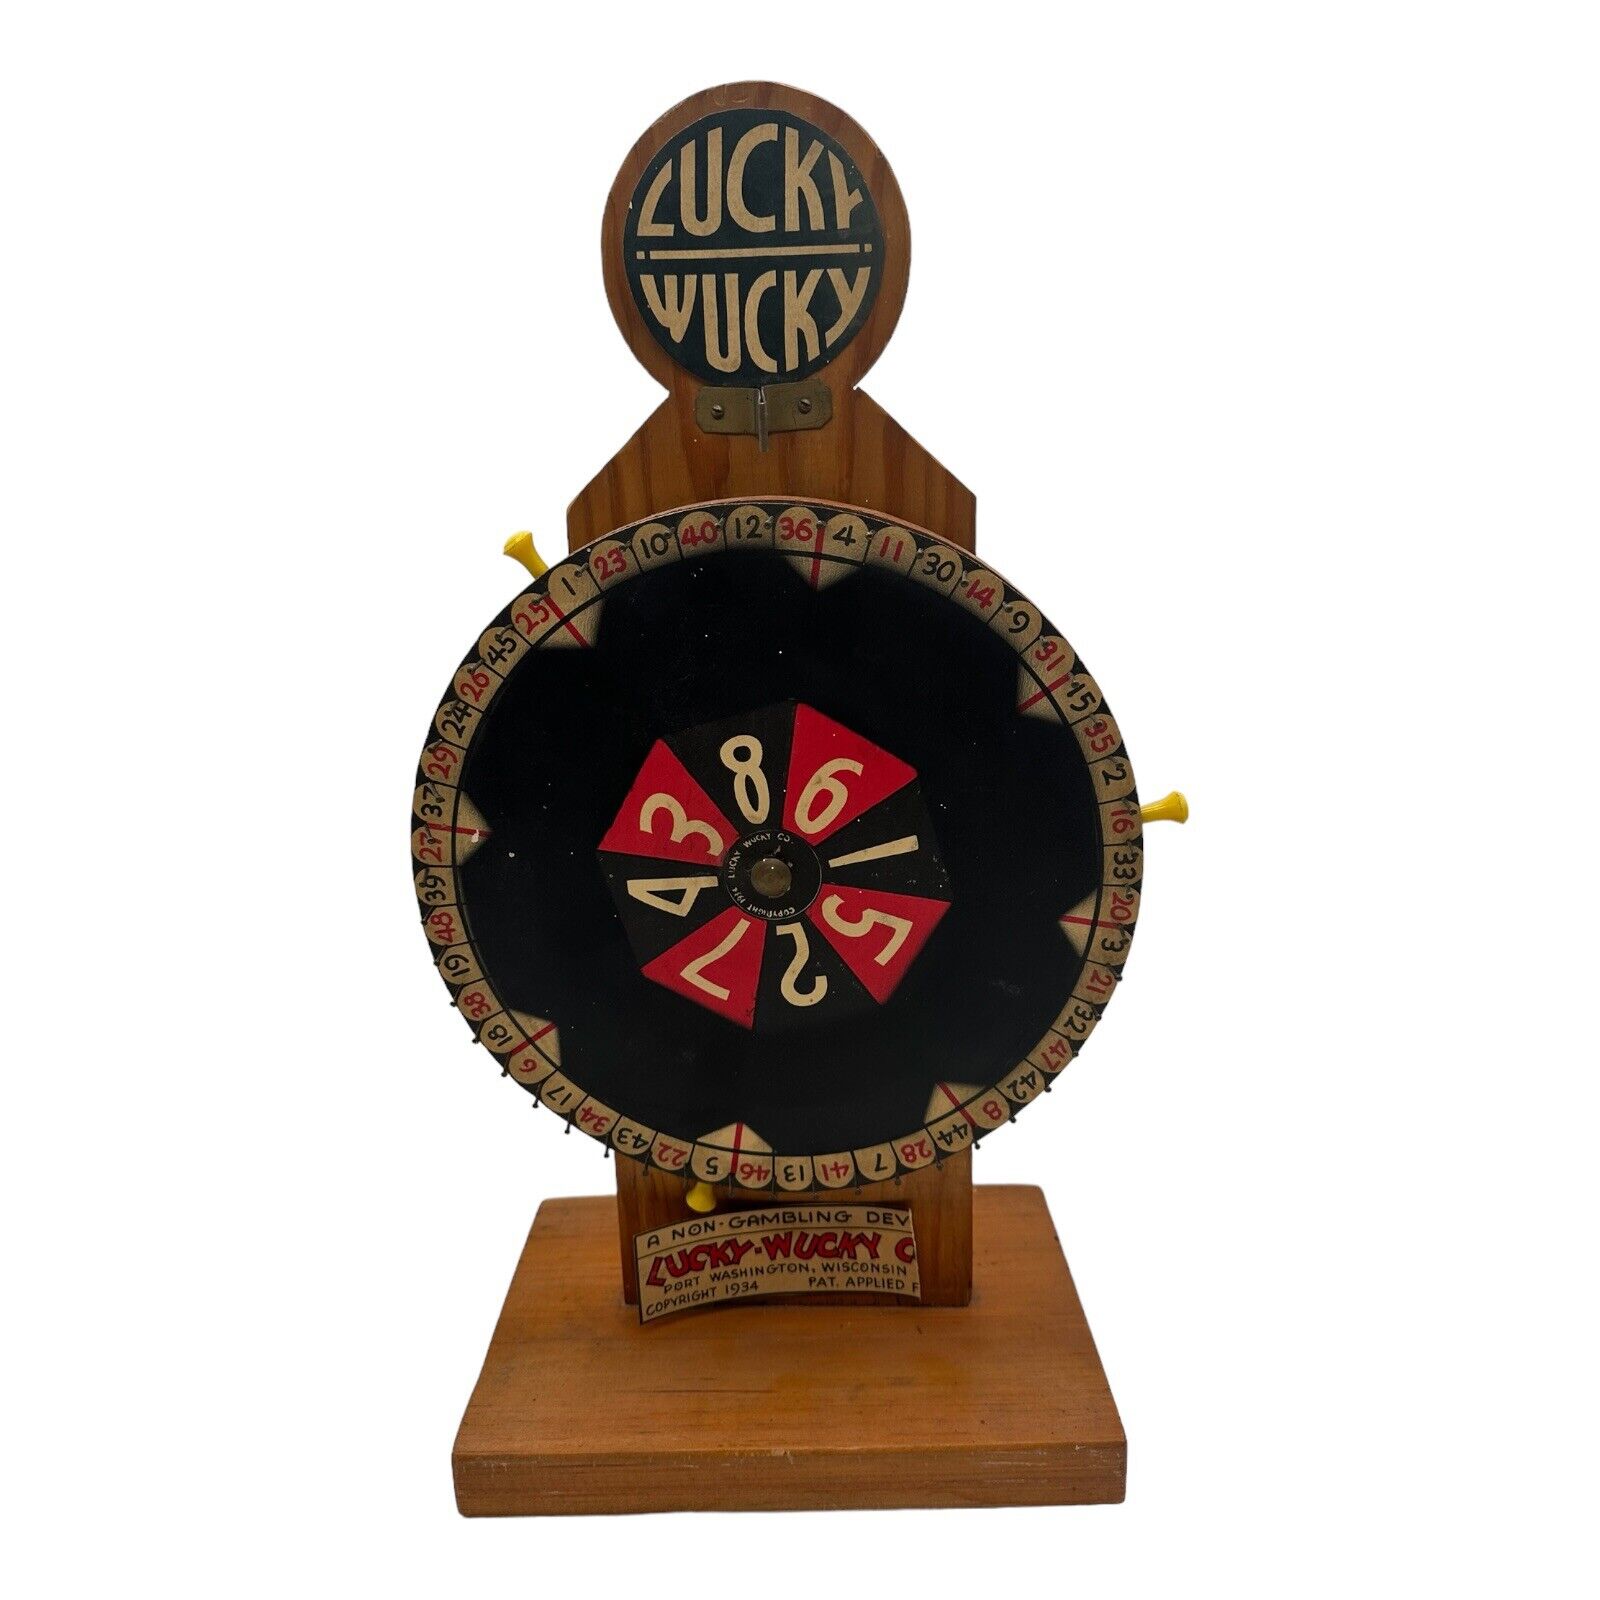 VTG Lucky Wucky Roulette Wheel Trade Stimulator 1934 Non Gambling Device Wooden